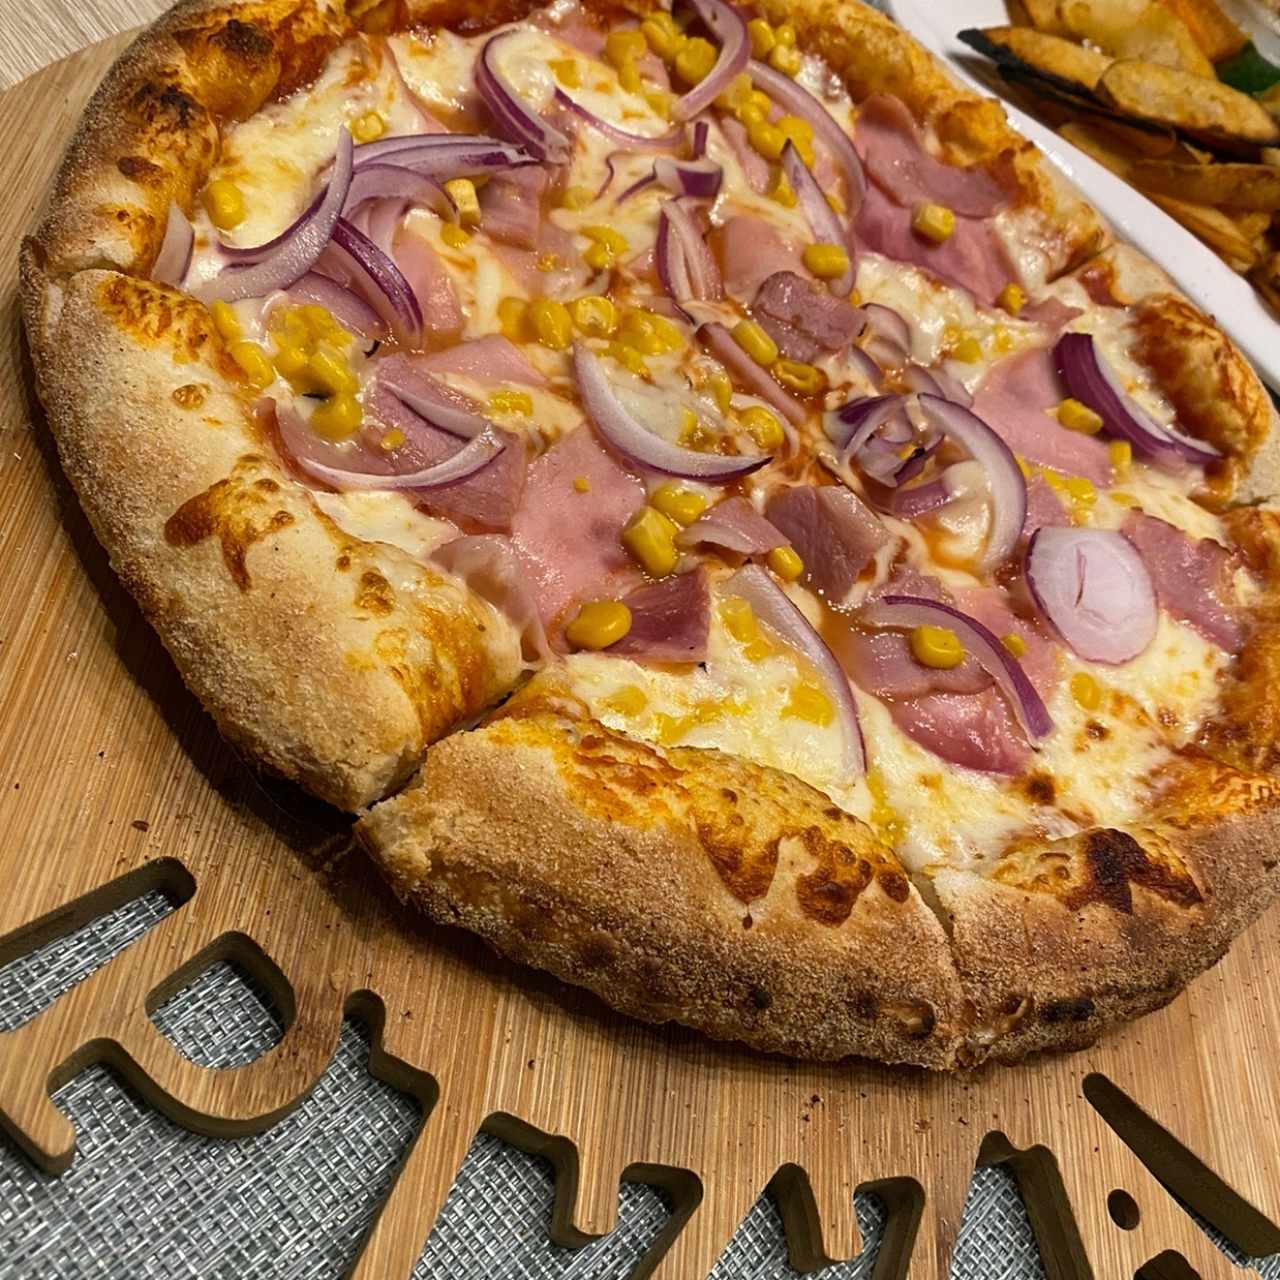 Charlie’s pizza